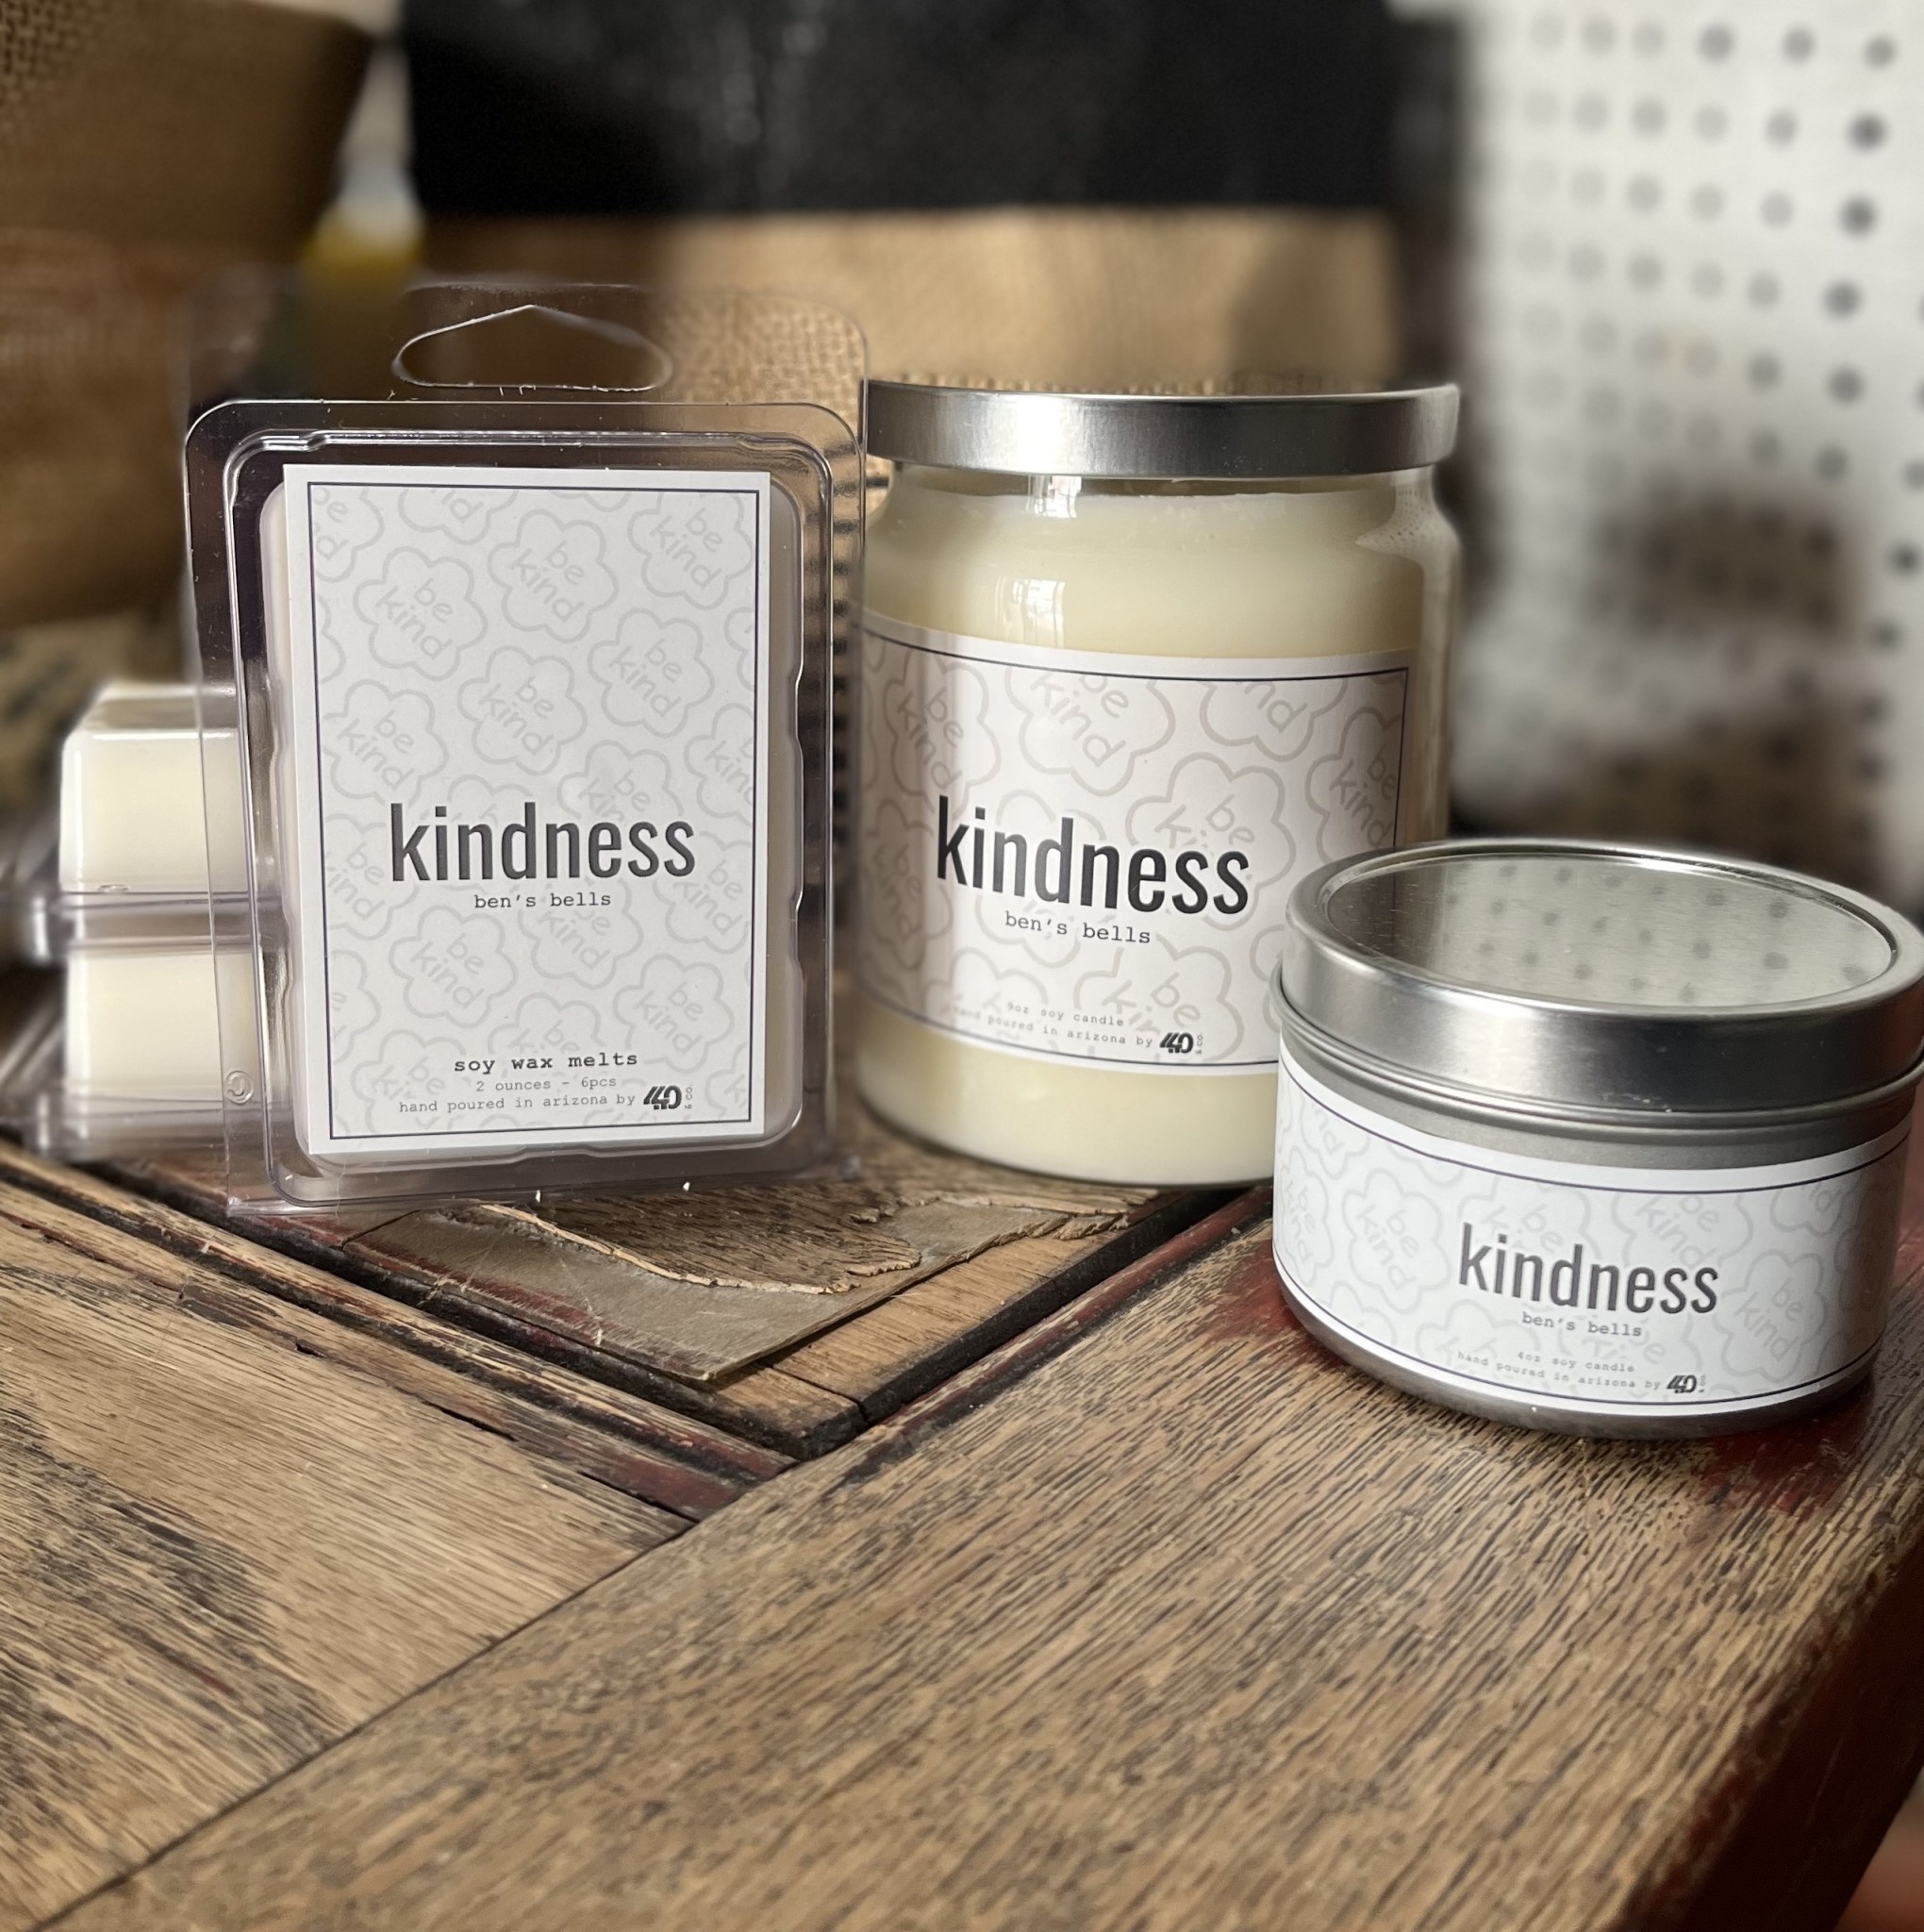 440 & Co. Candle- kindness 4oz tin